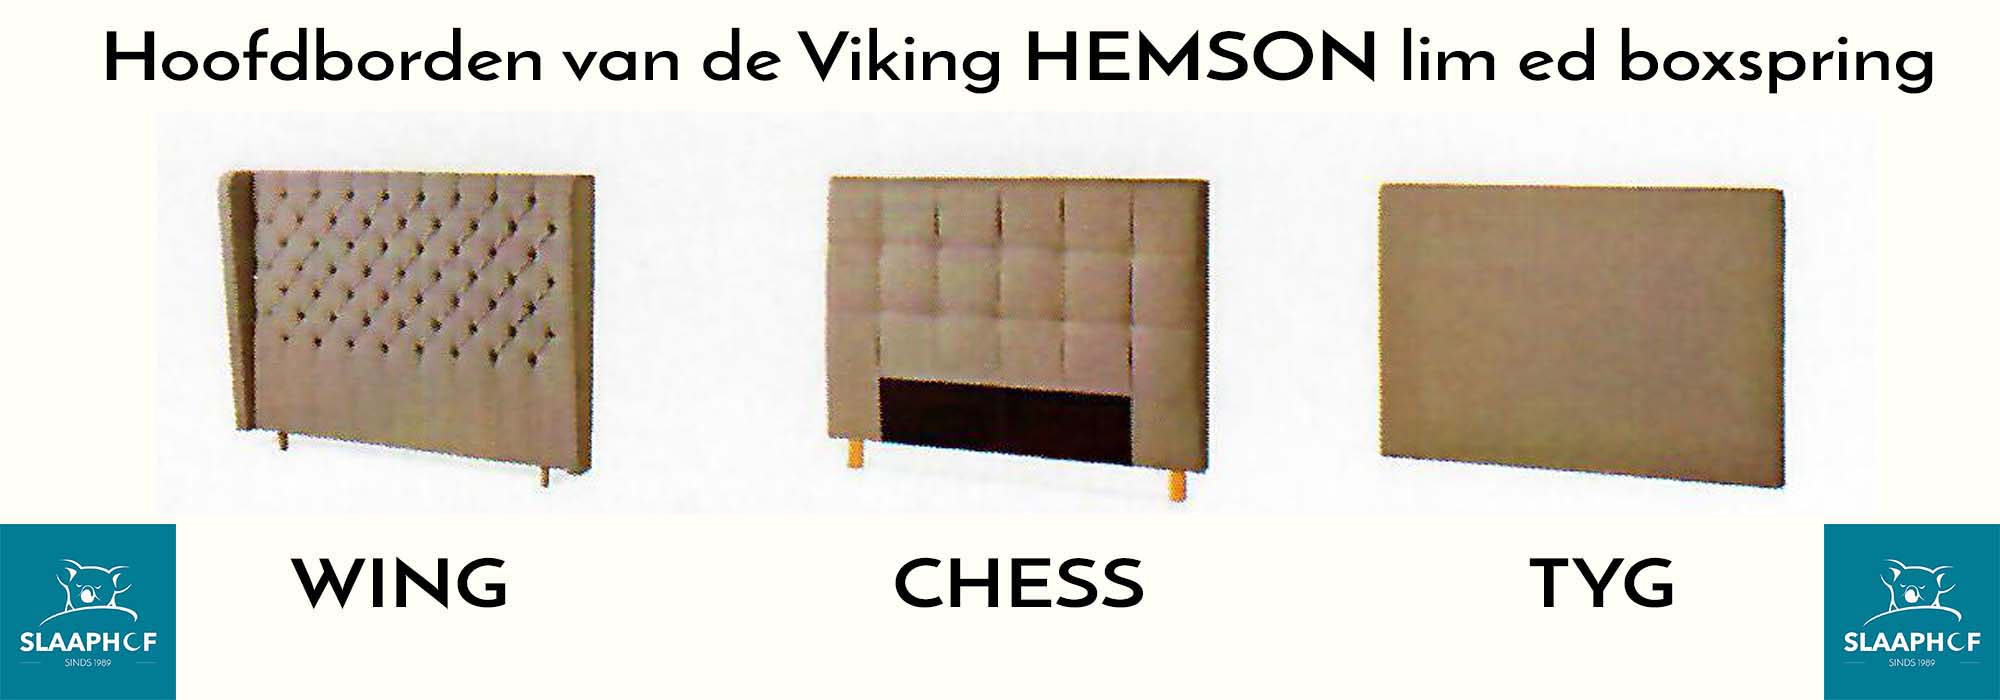 Hoofdborden Viking Hemson lim ed